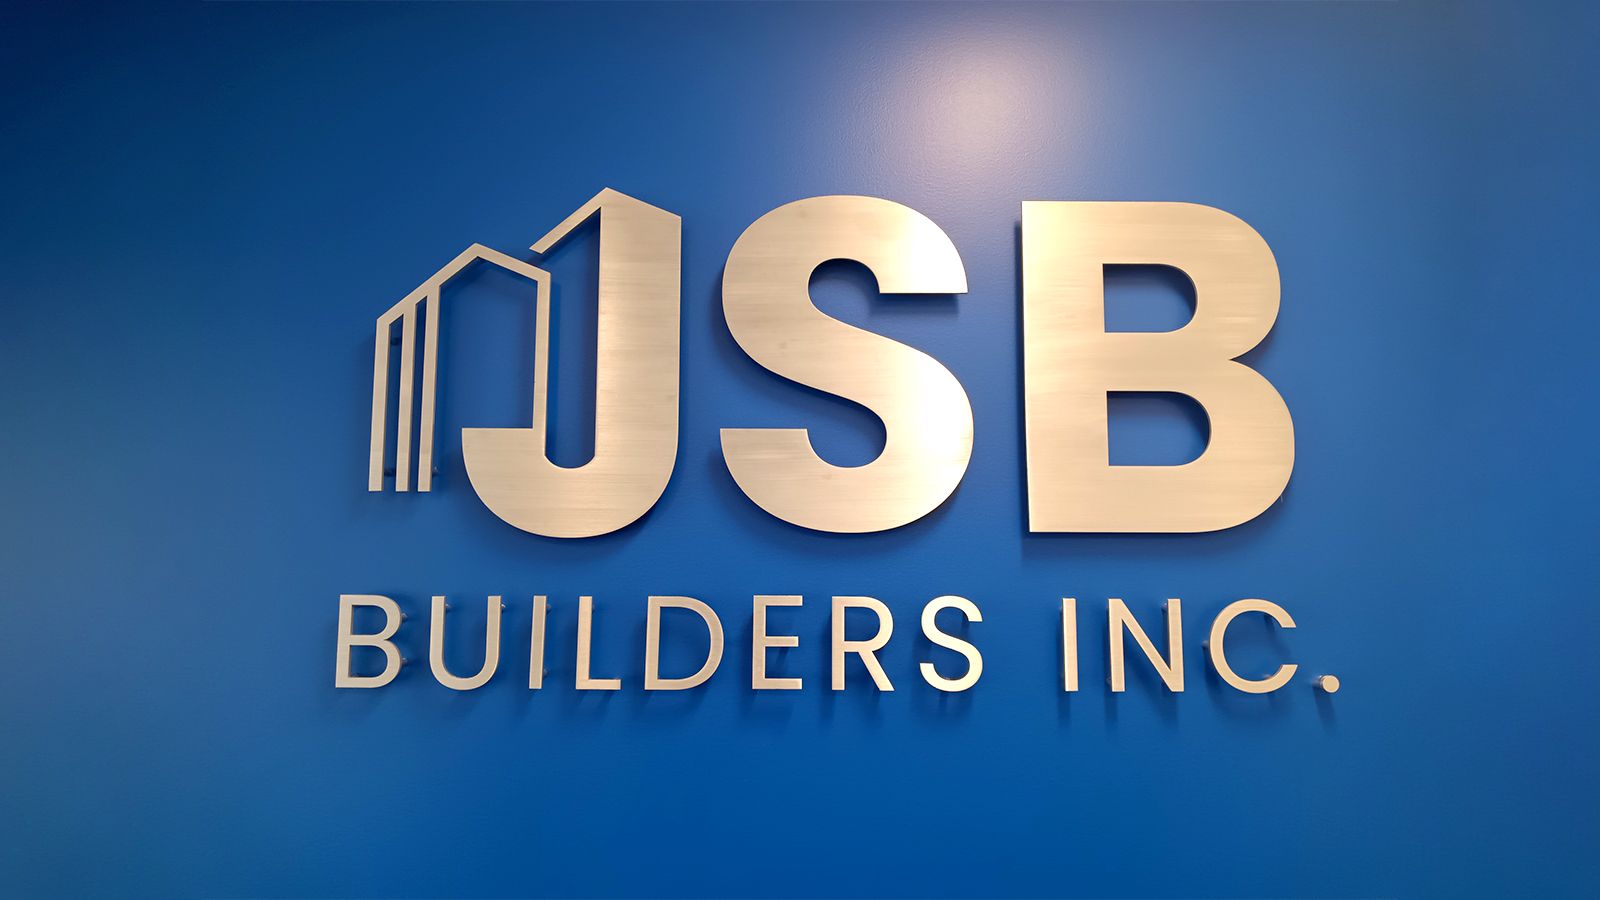 JSB builders inc. aluminum sign